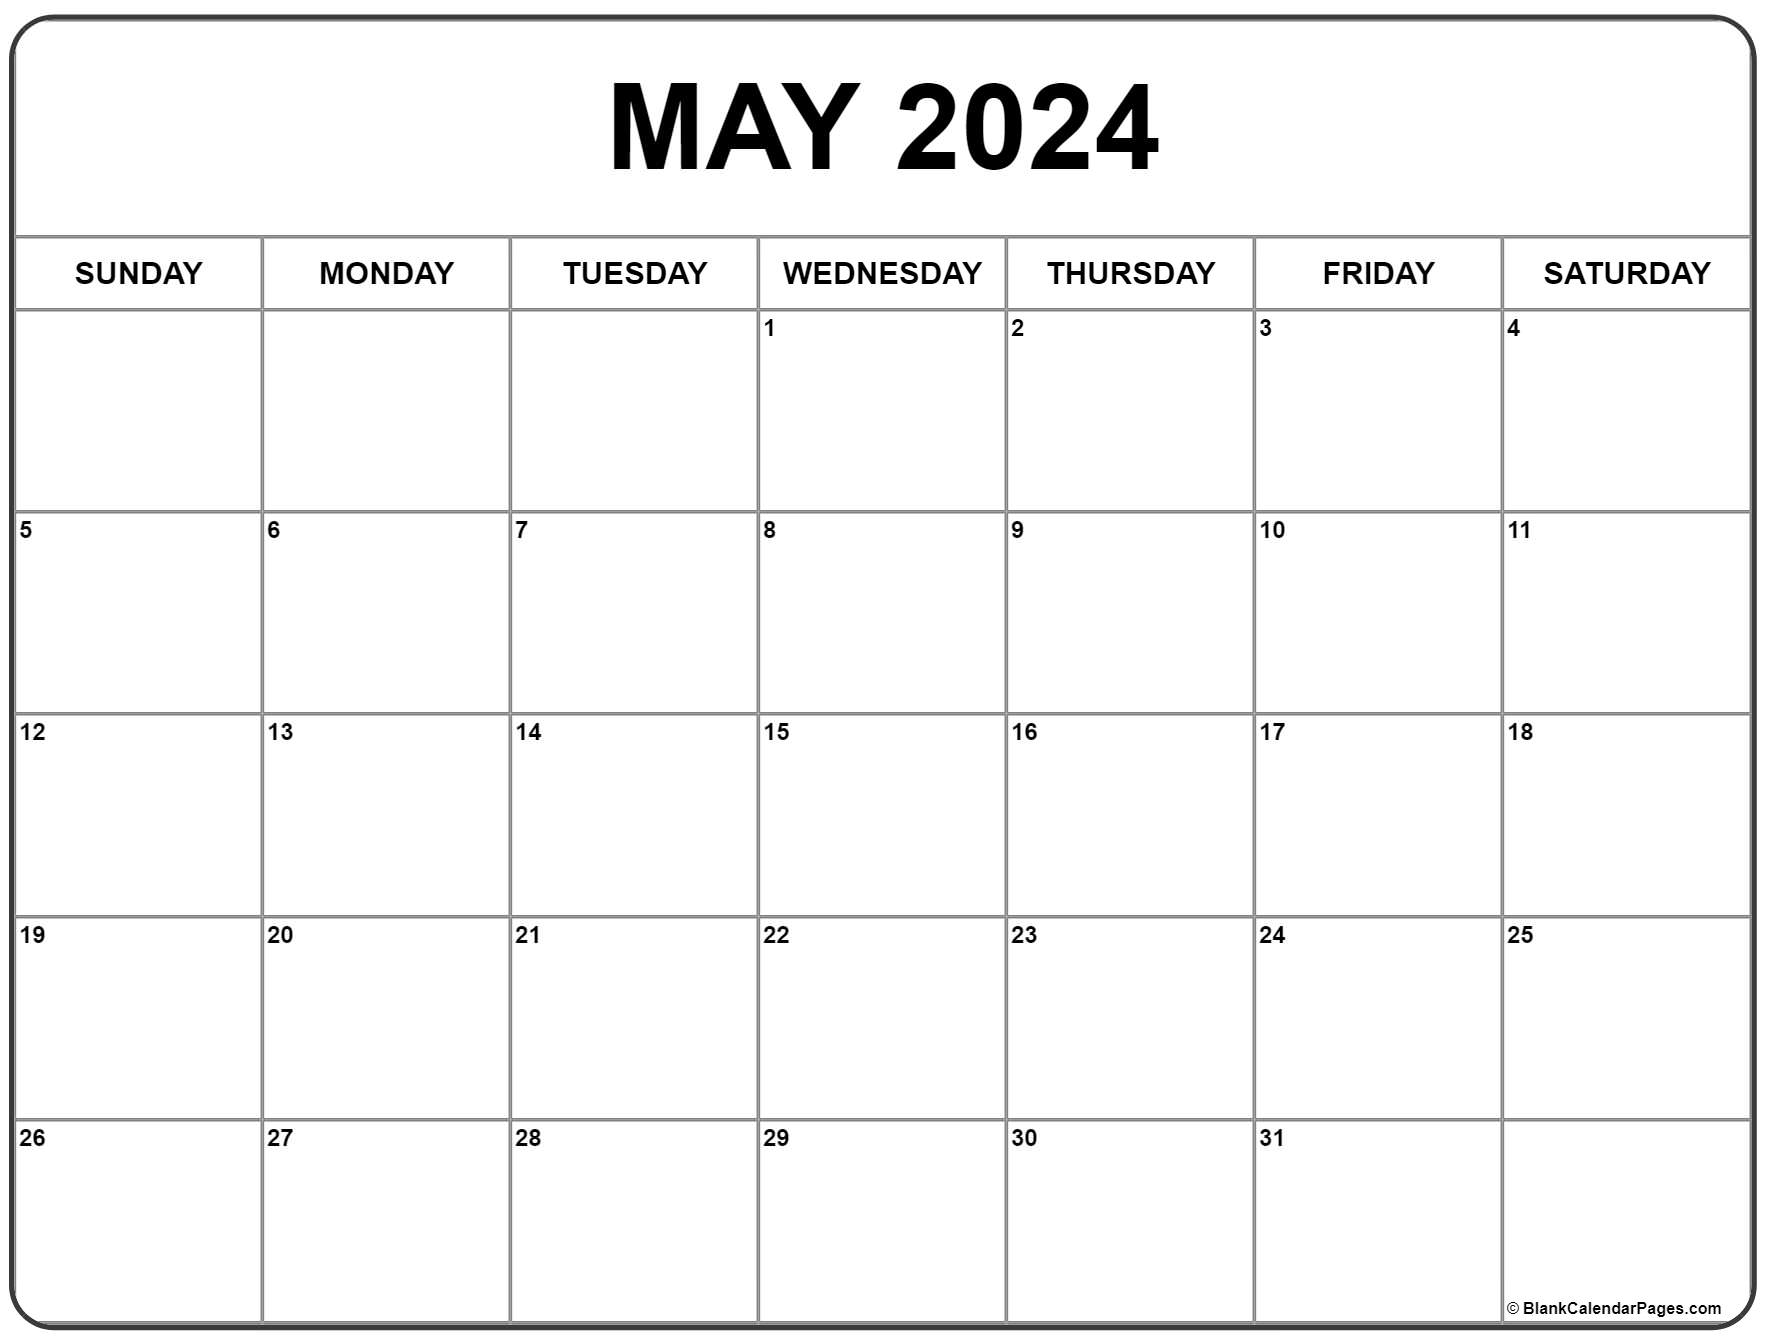 May 2024 Calendar | Free Printable Calendar for Free May Calendar Printable 2024